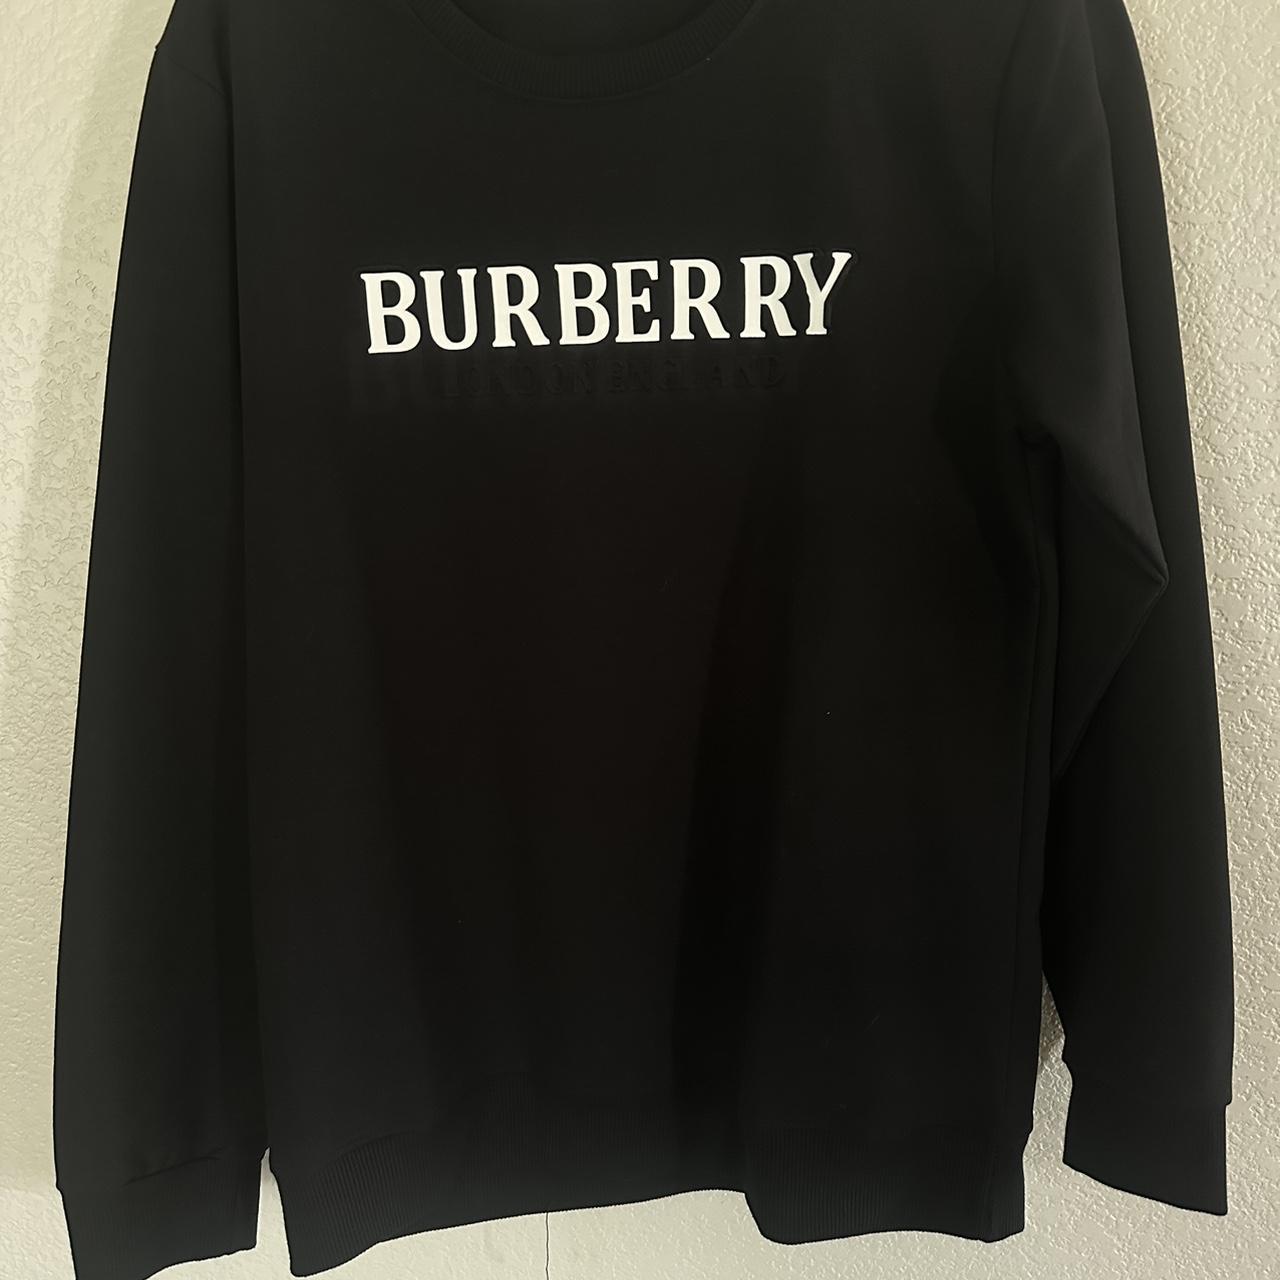 Burberry Men's Black and White Sweatshirt | Depop